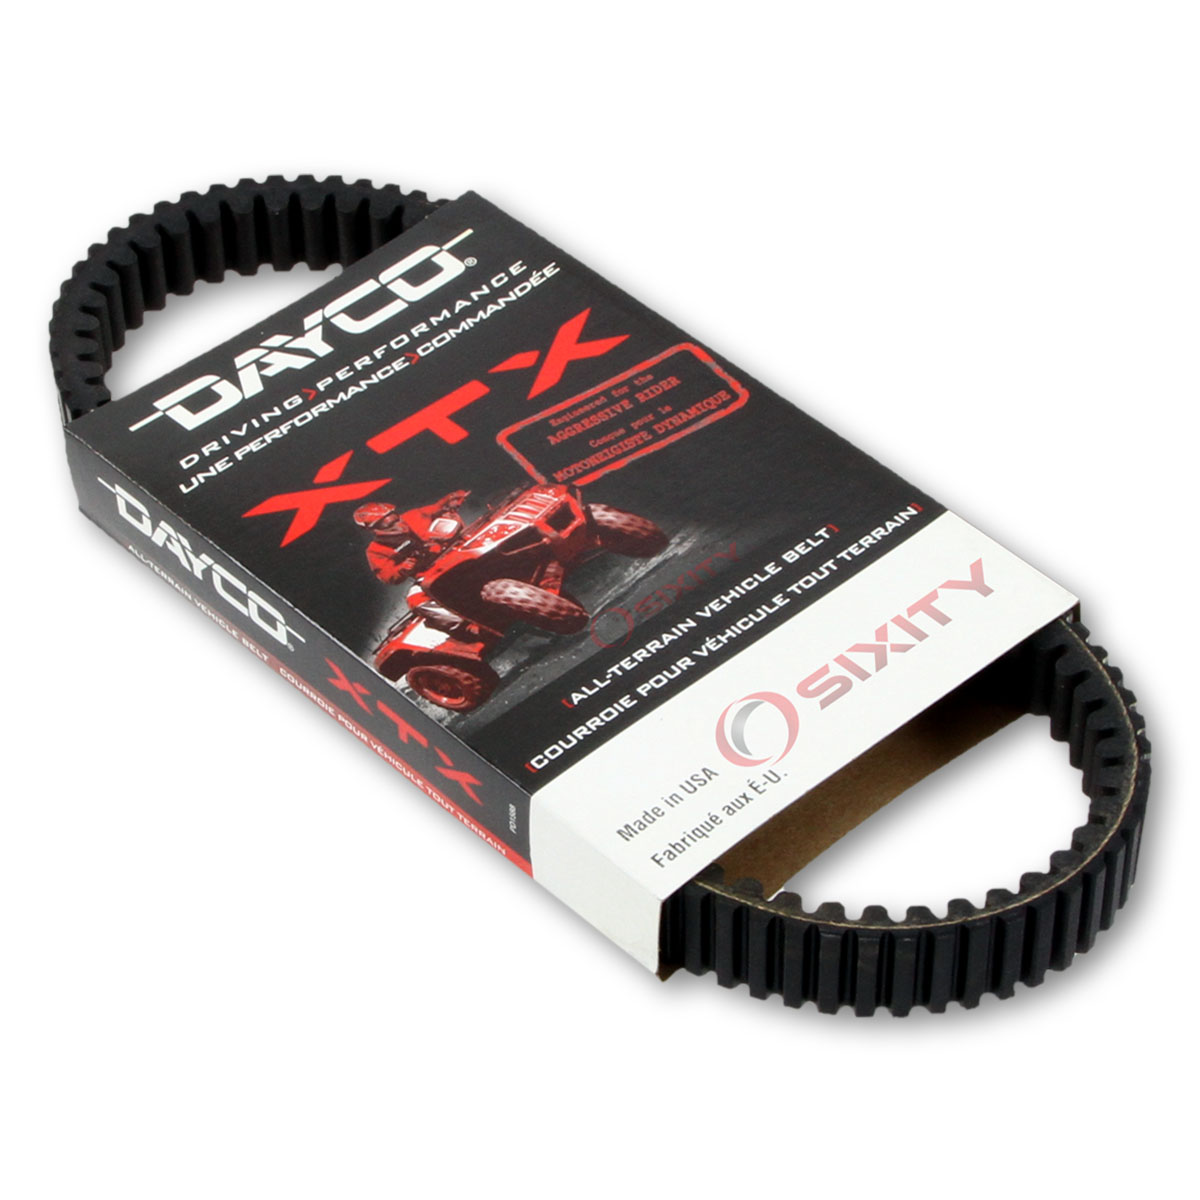 Dayco XTX Drive Belt for 2012 Arctic Cat 1000i GT - Extreme Torque CVT